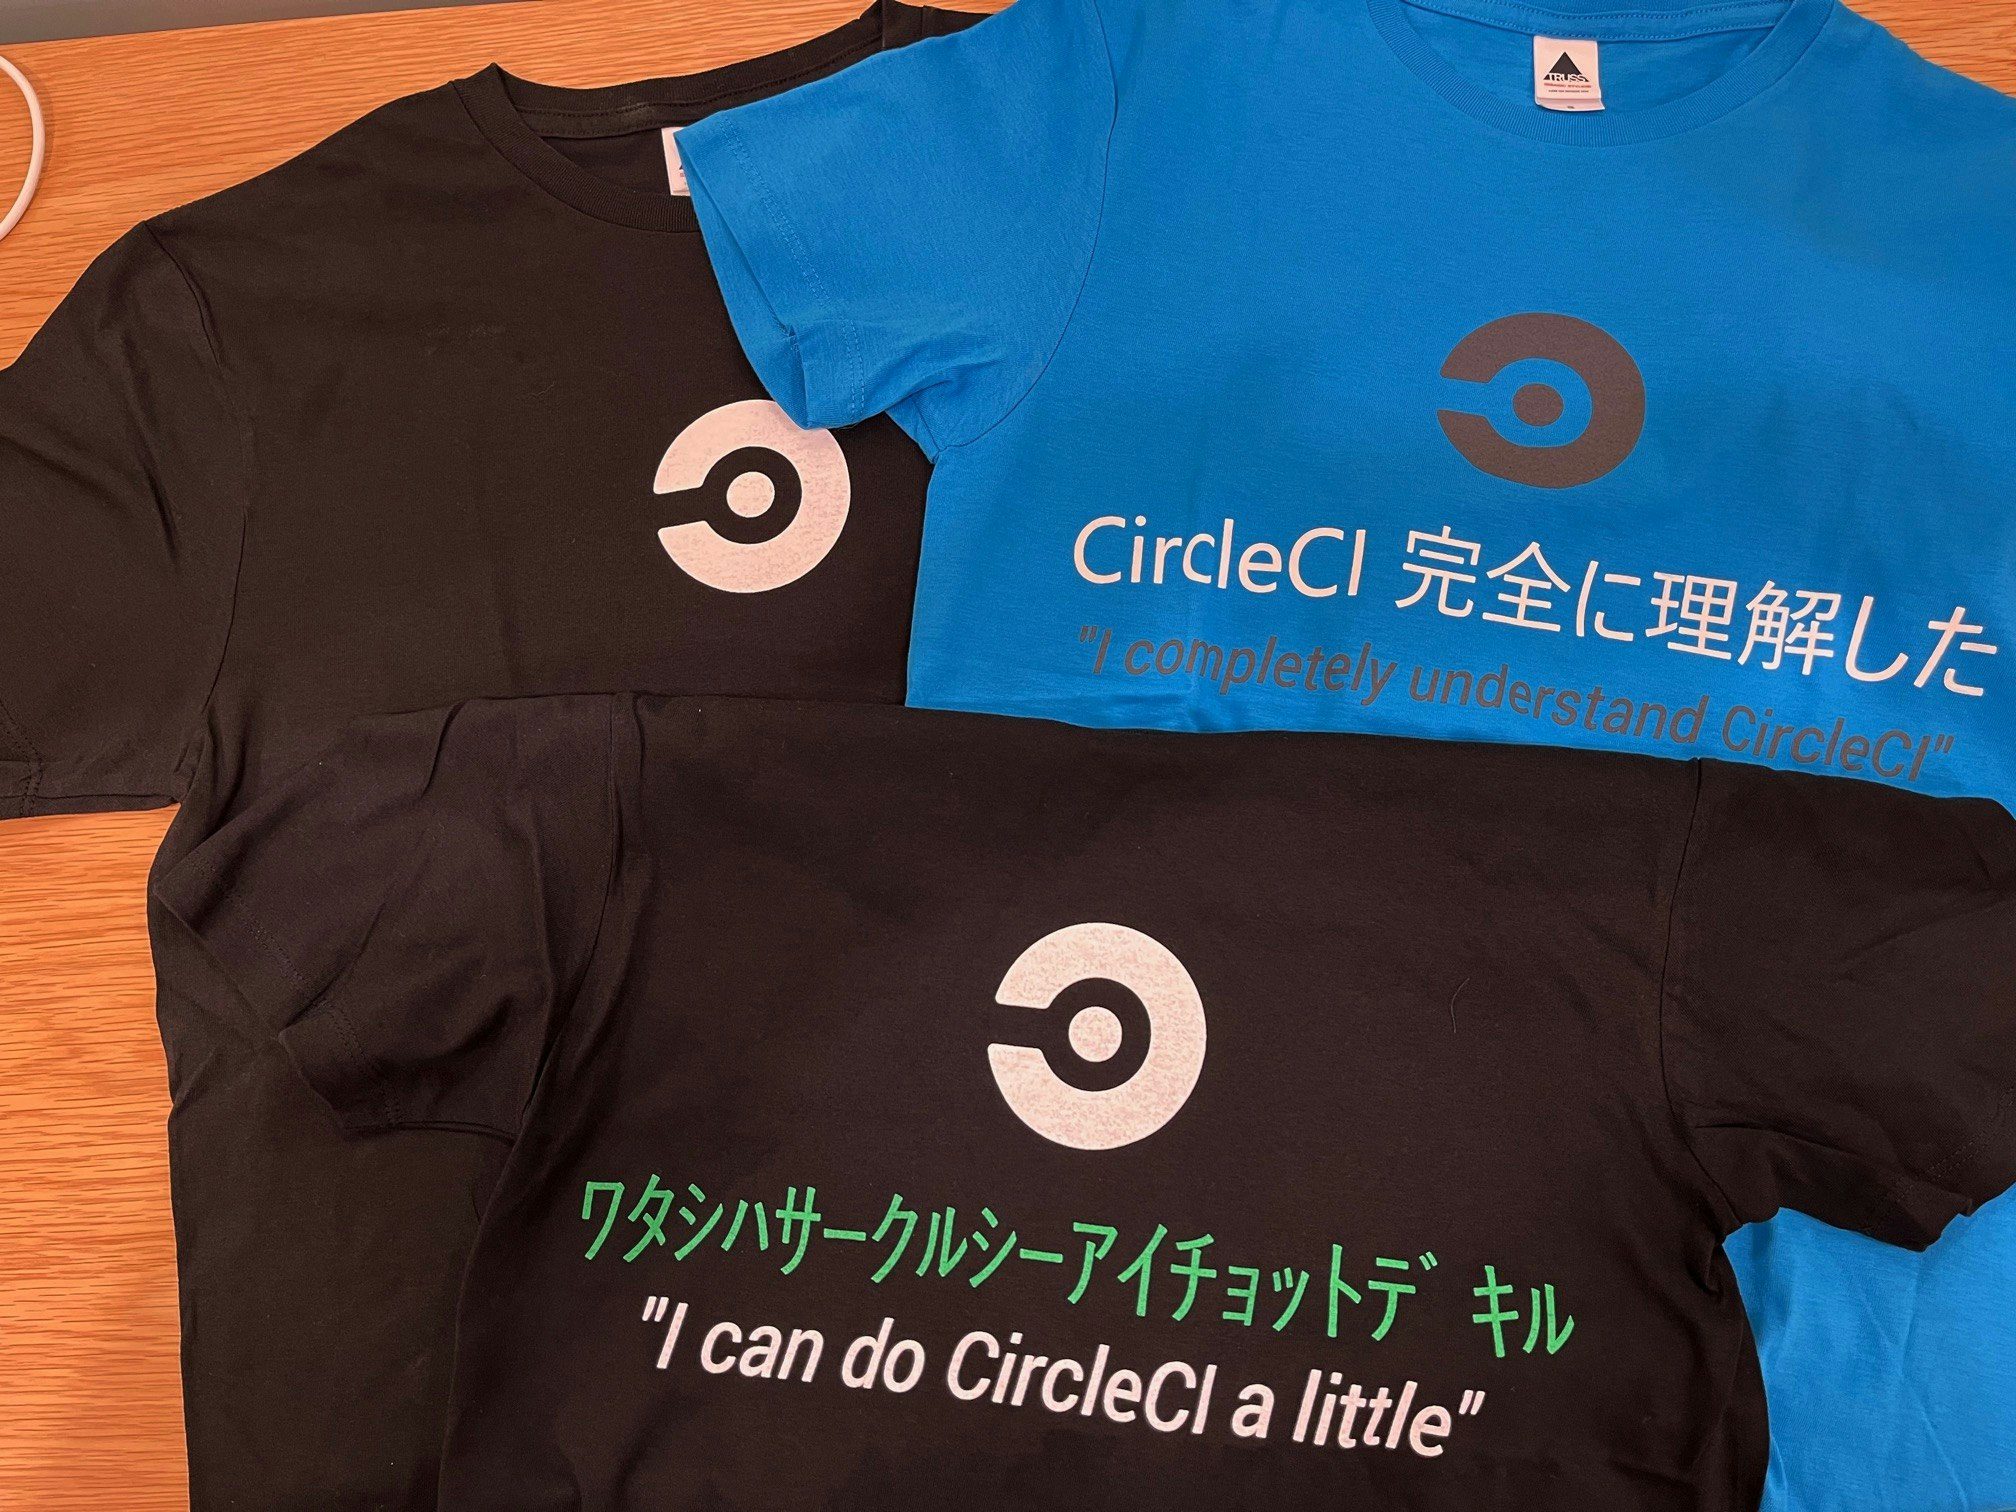 CircleCI-Tshirts.jfif